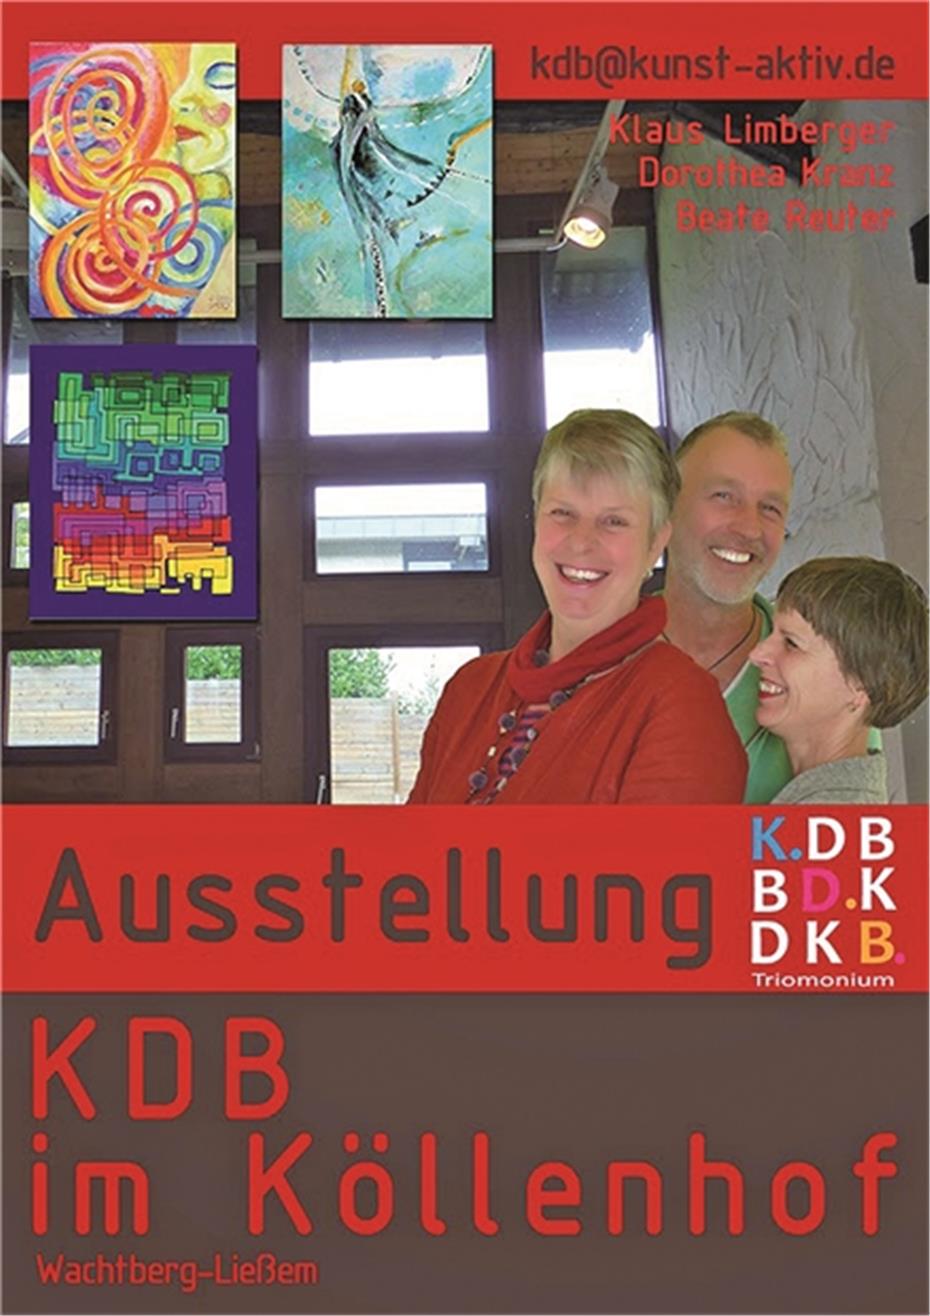 KDB-Ausstellung
im Köllenhof